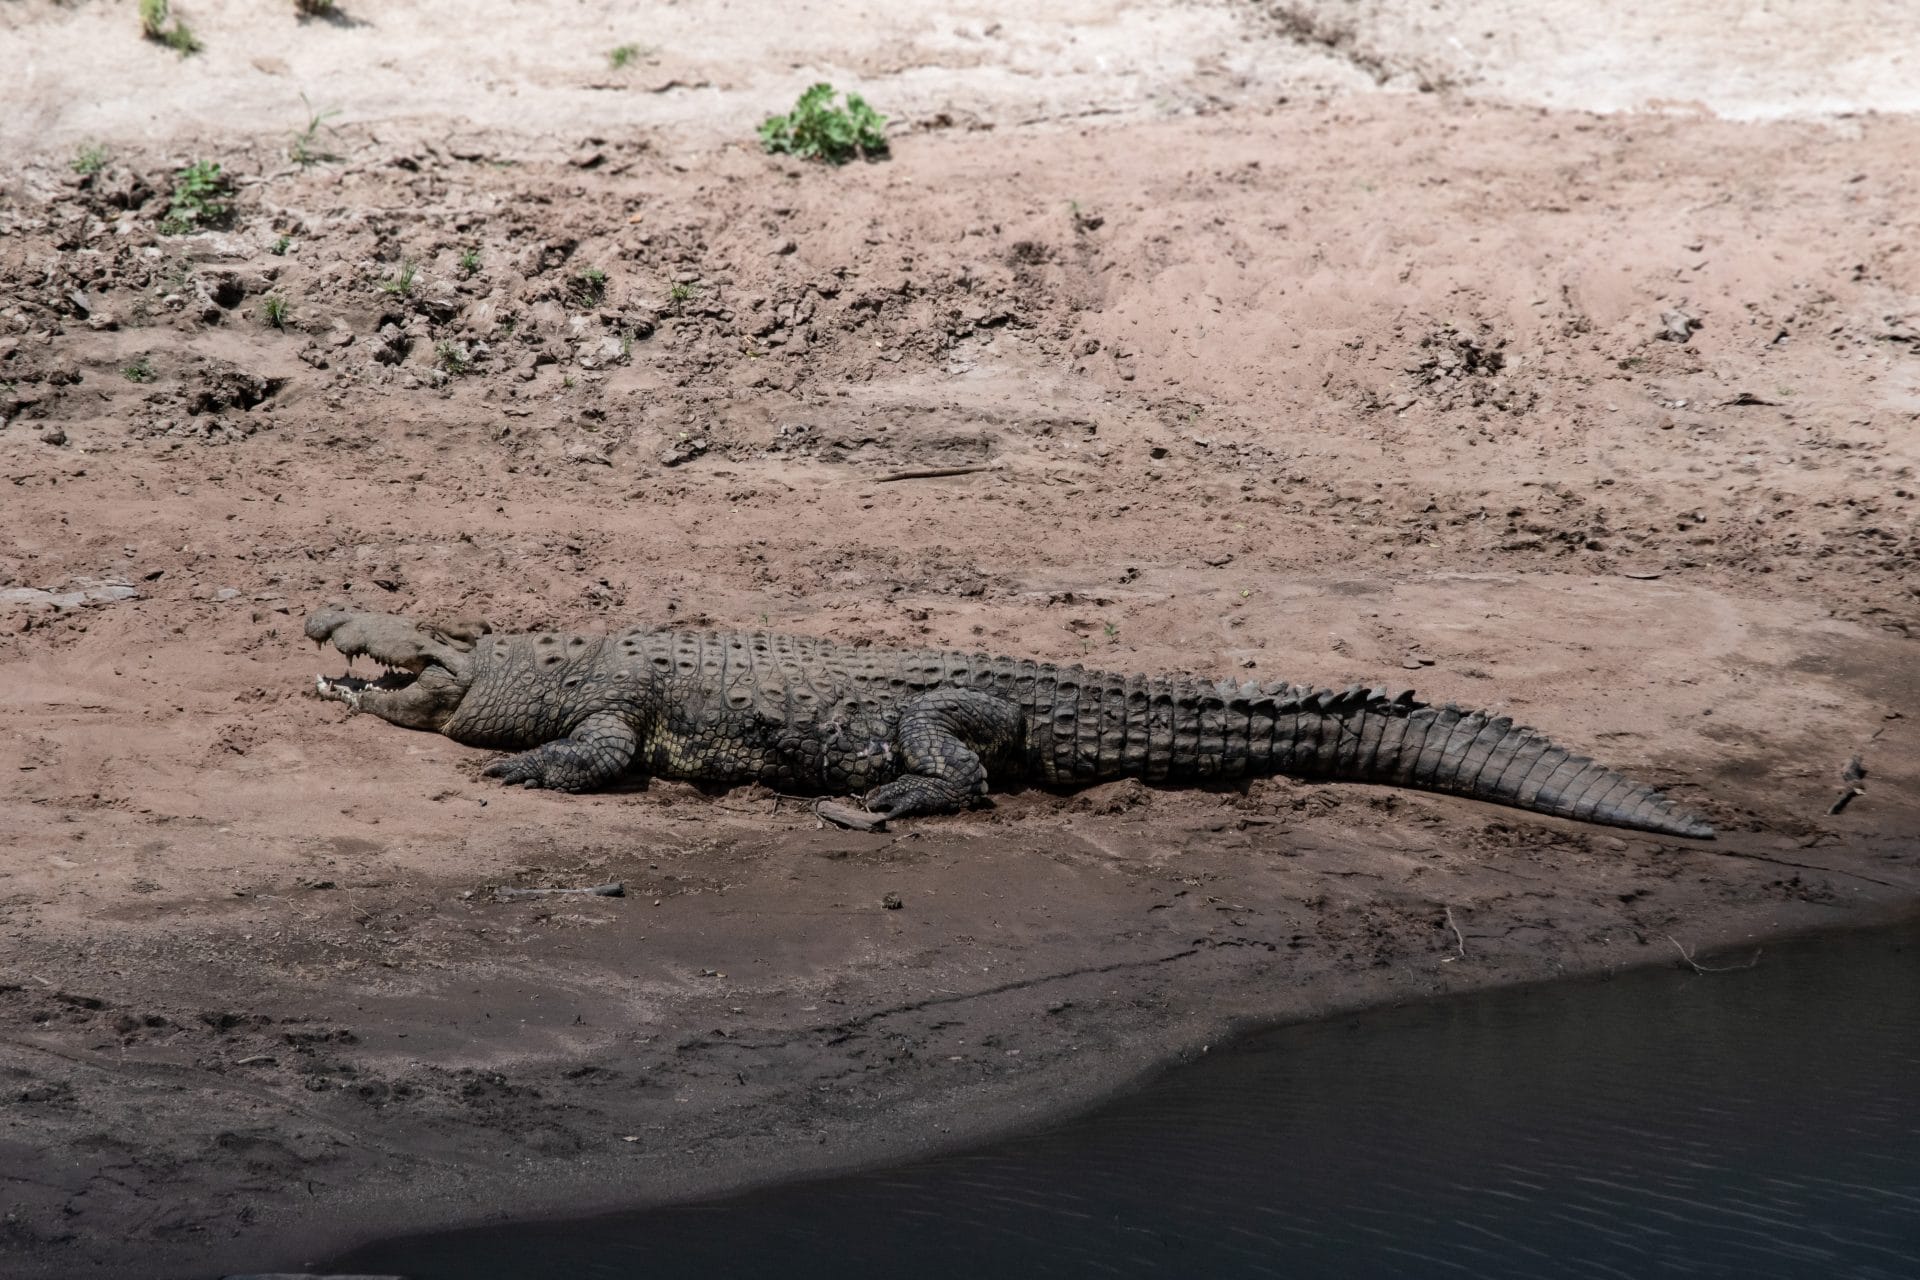 Crocodile on Tanzania safari holiday